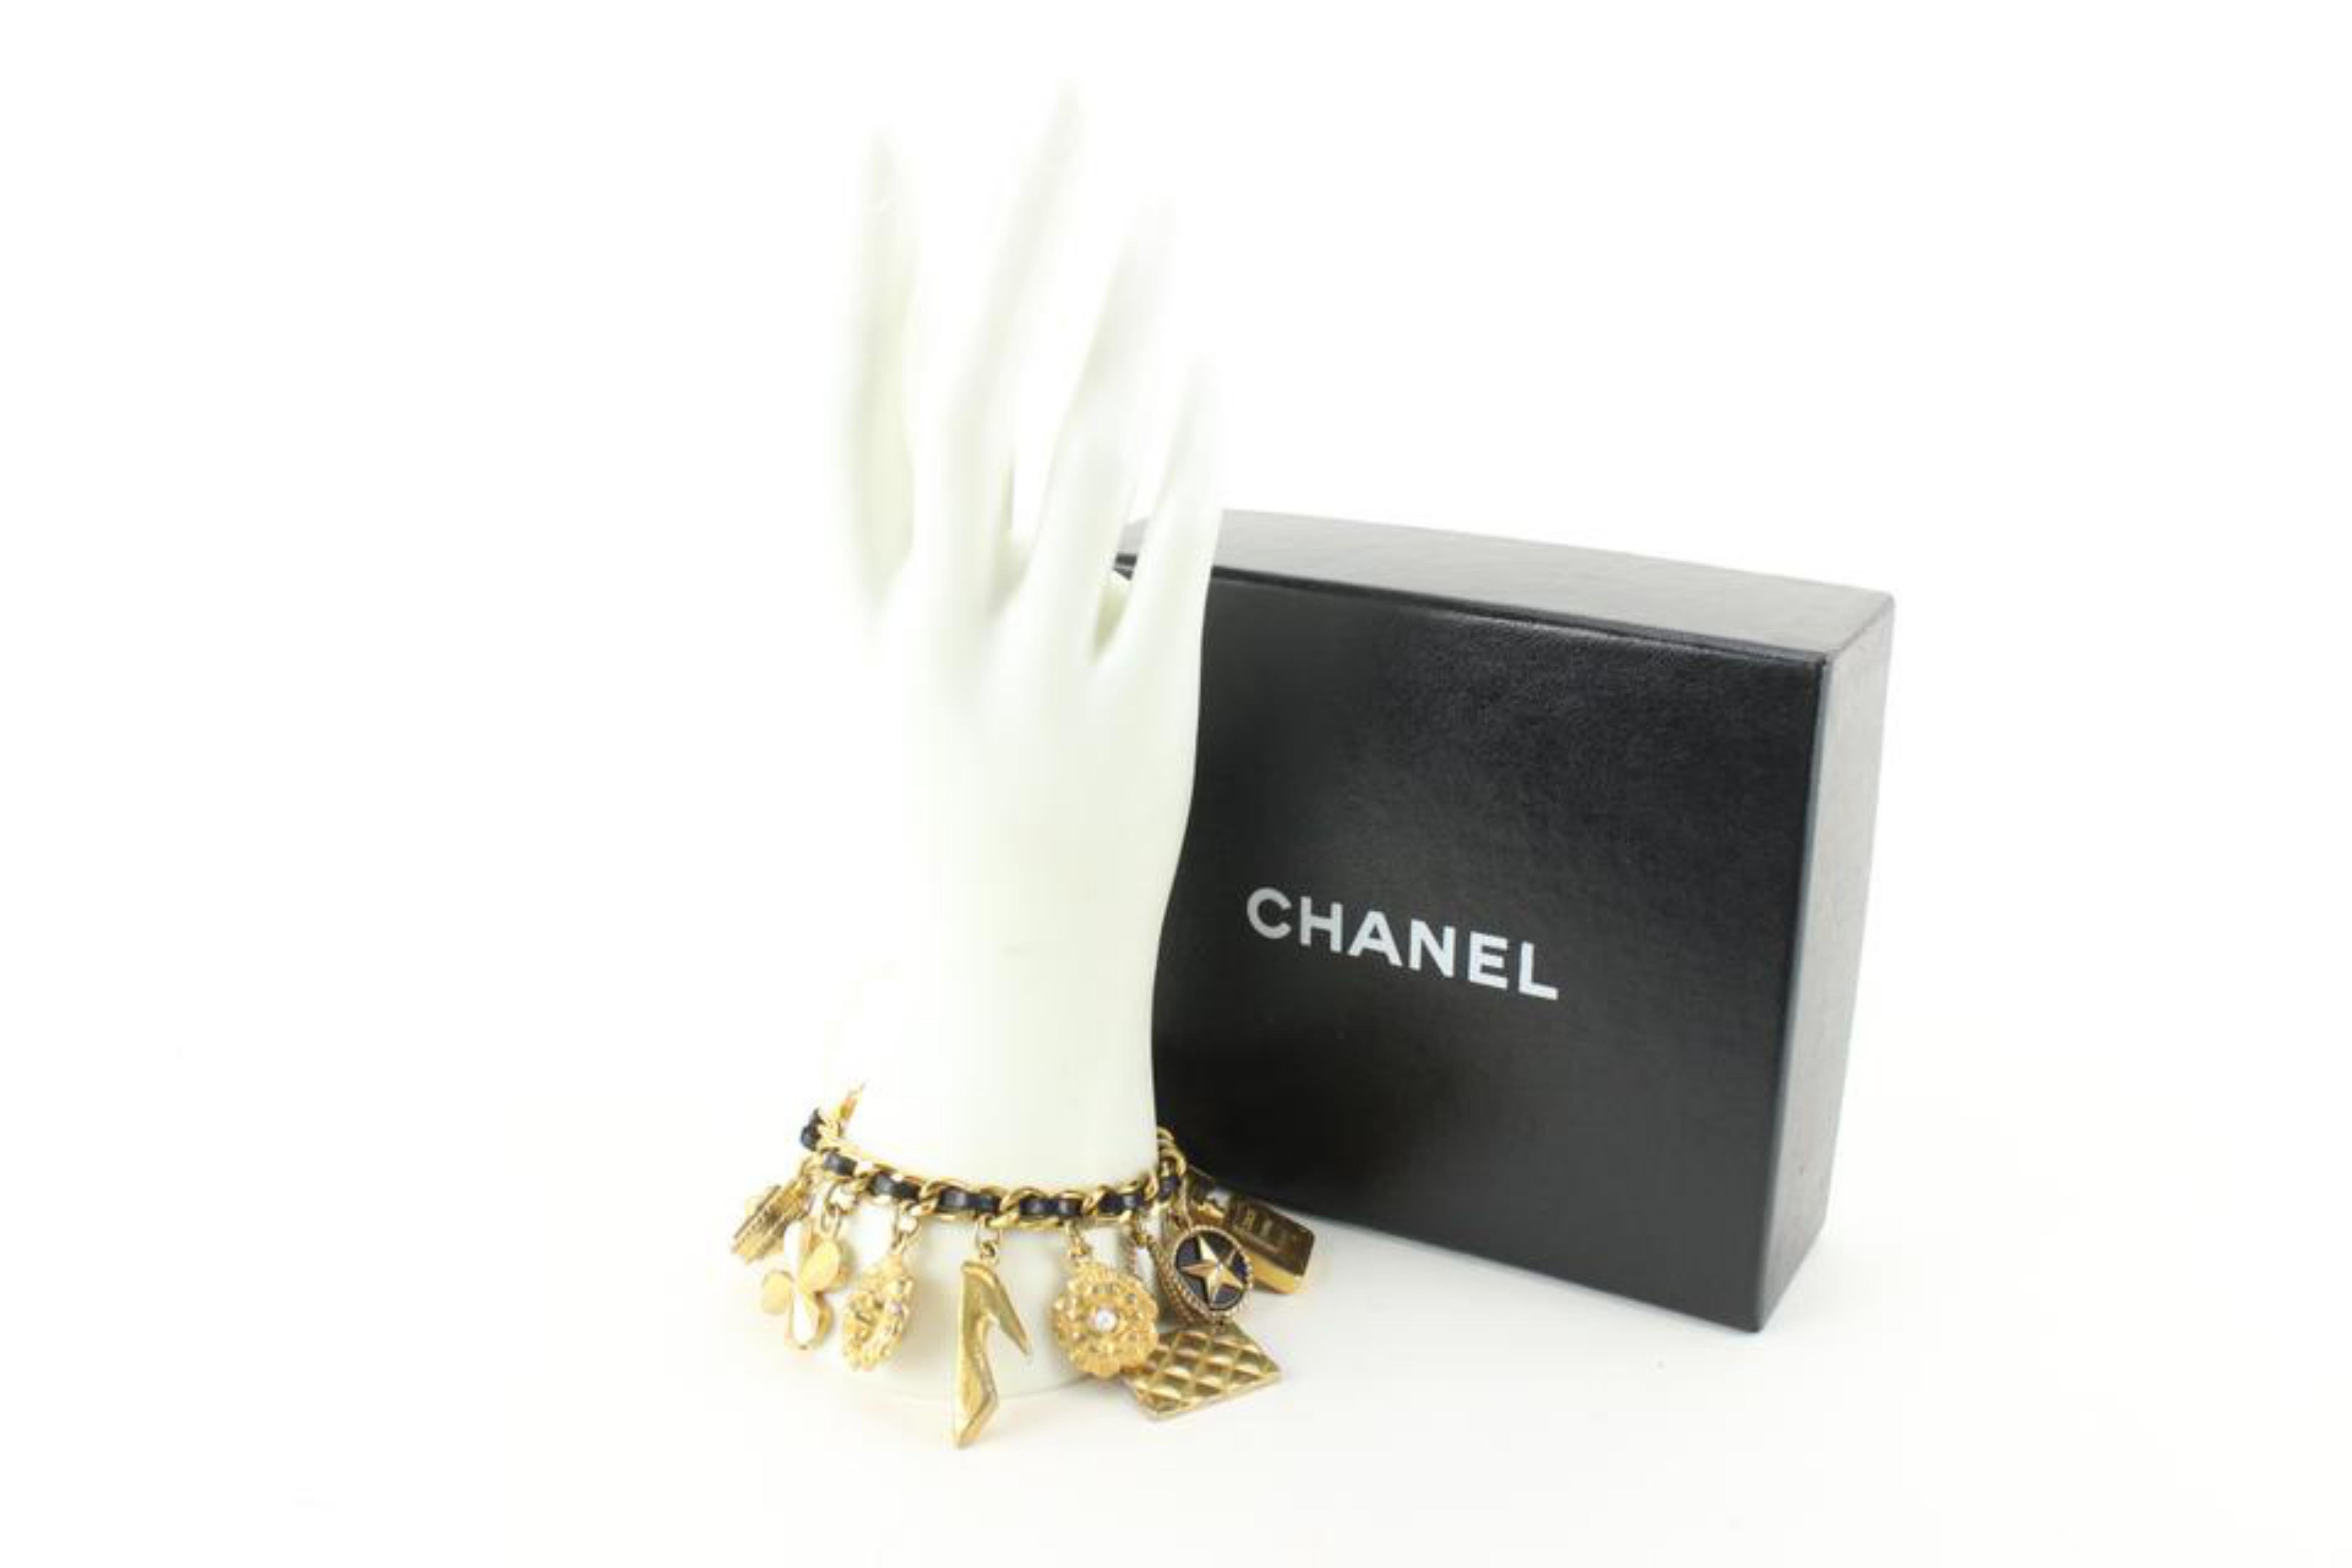 ChanelUltra Rare 95P Charme Armband Kette 1ck1024a
Datum Code/Seriennummer: 95 P
Hergestellt in: Frankreich
Maße: Länge:  7,5